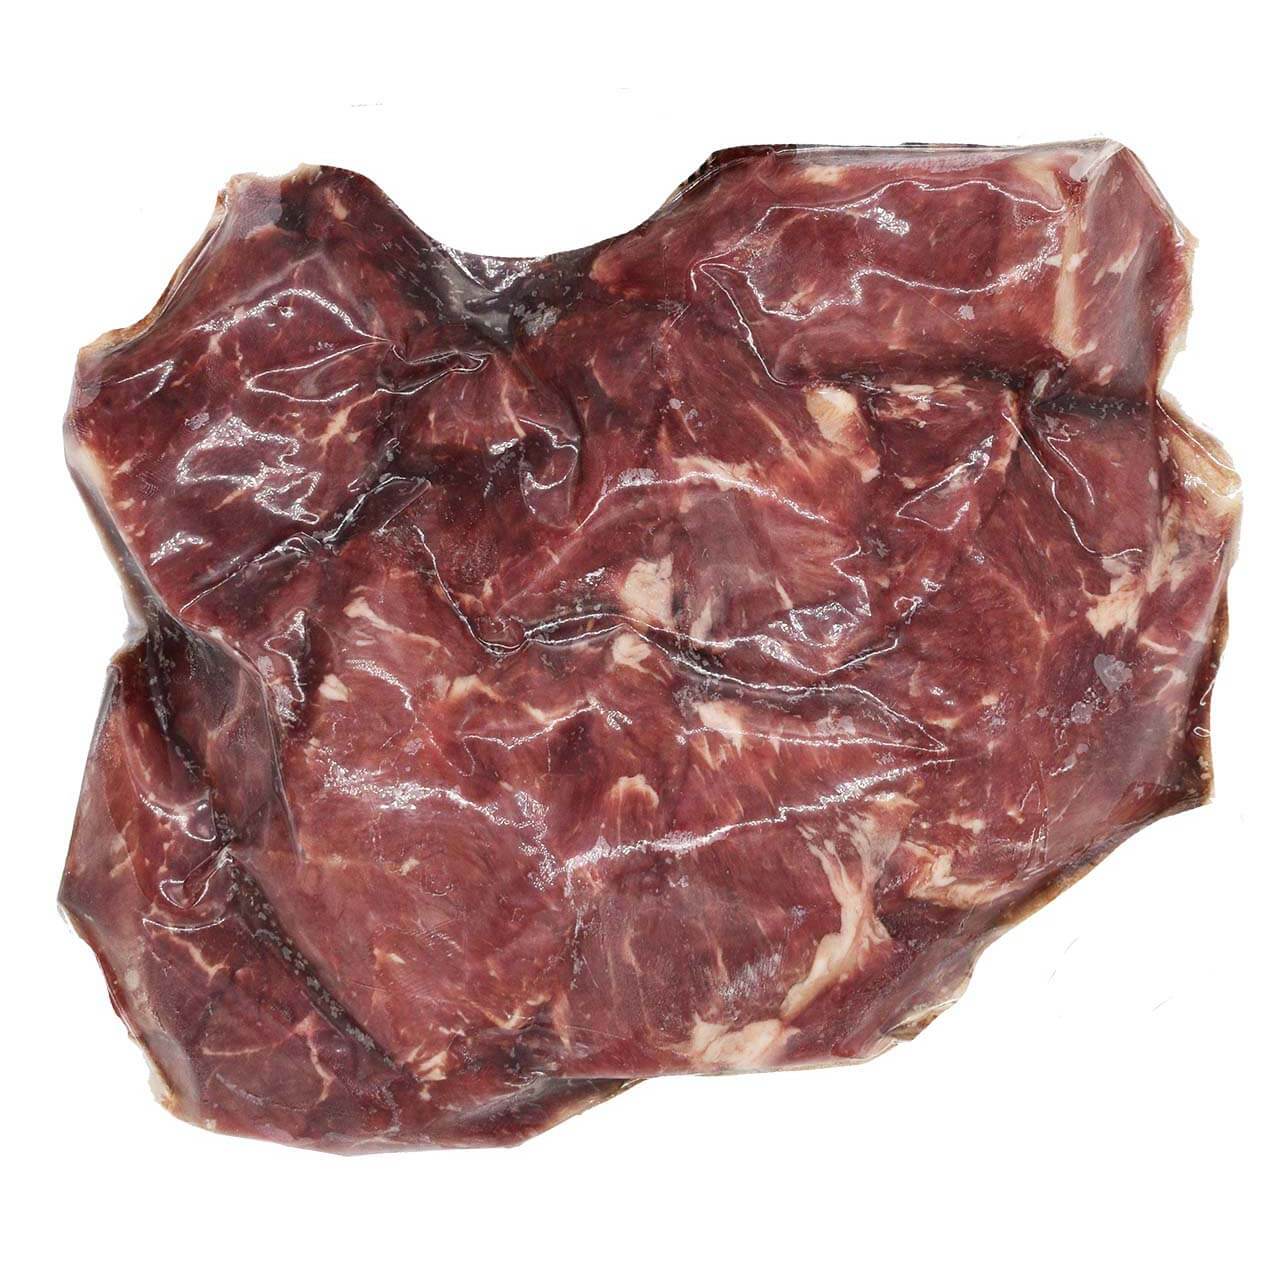 Beef Steak Kabob Meat - Organic